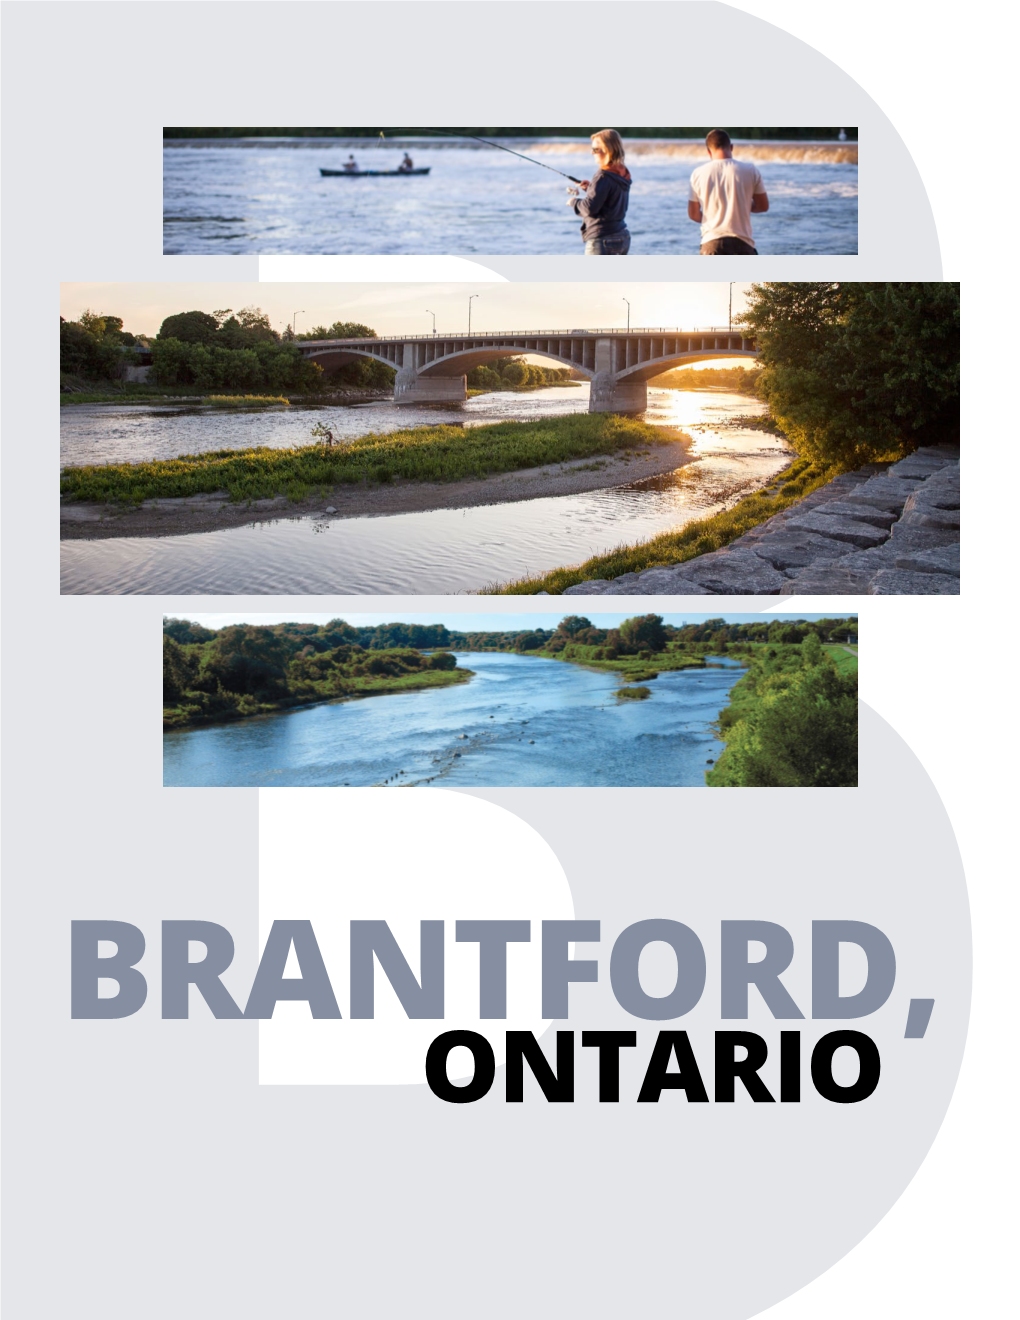 Brantford, Ontario